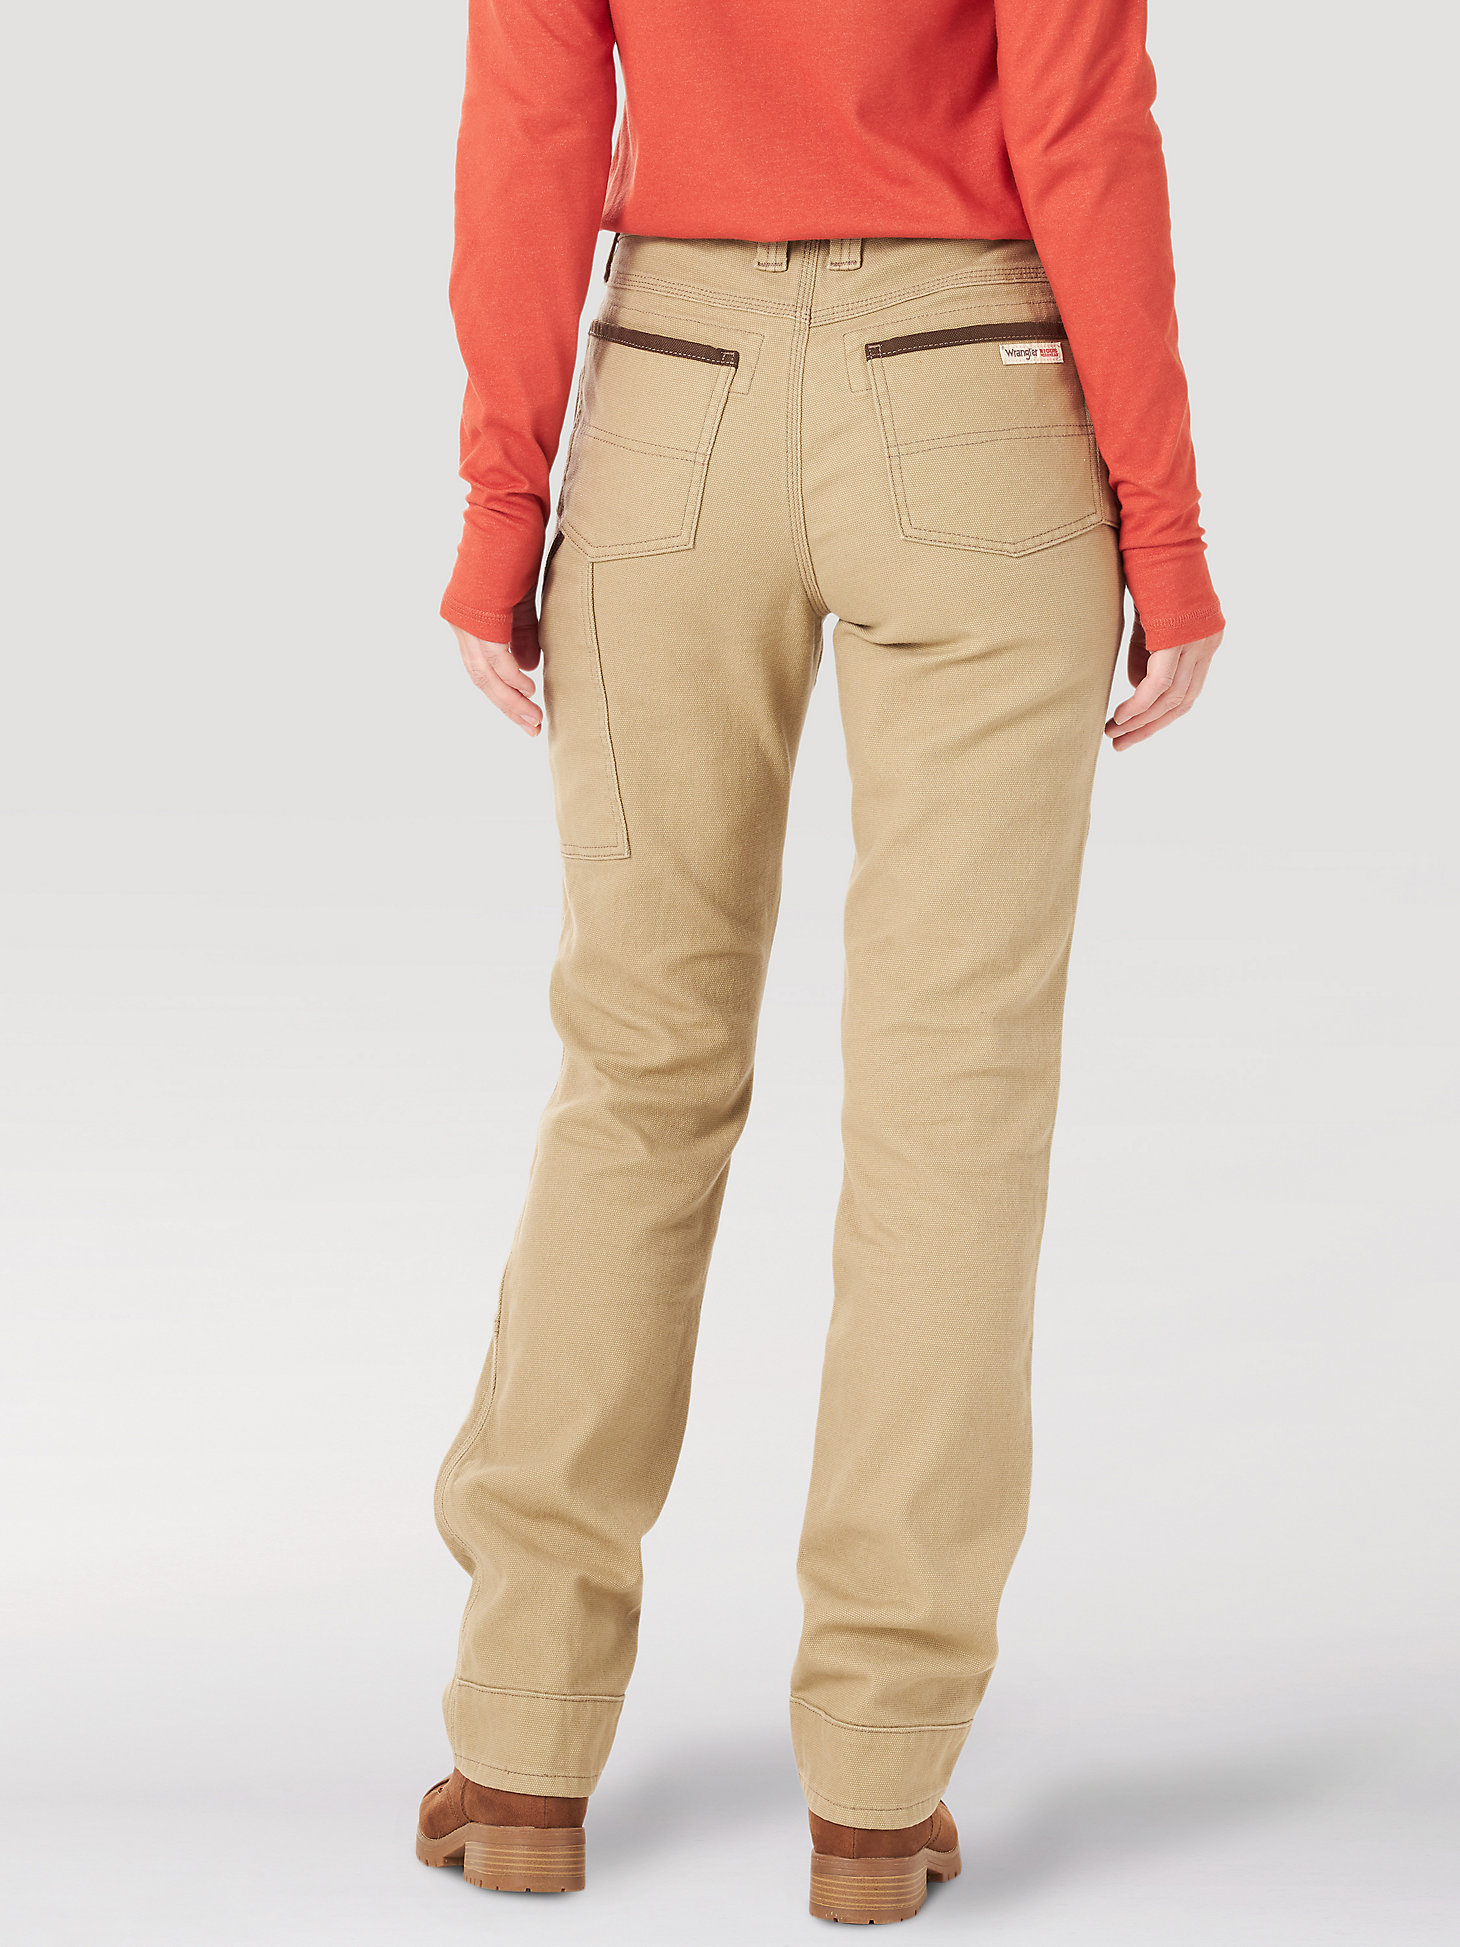 Women's Wrangler® RIGGS Workwear® Straight Fit Utility Work Pant in Golden Khaki alternative view 3